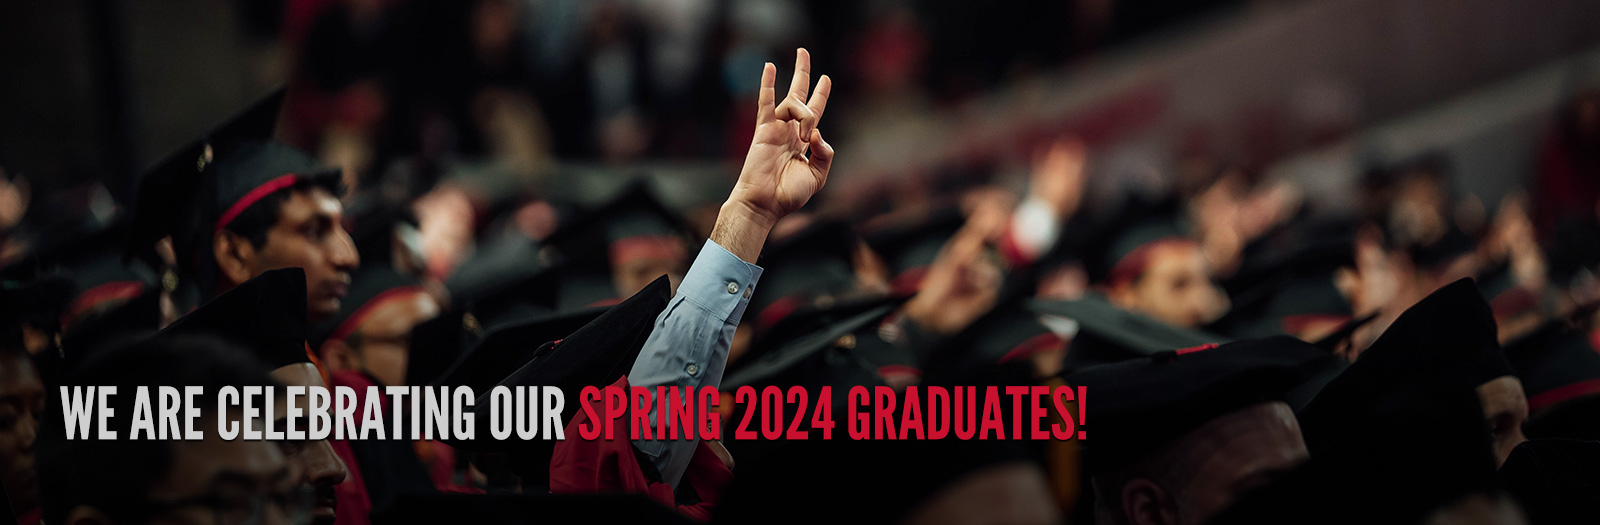 We Are Celebrating Our Spring 2024 Graduates